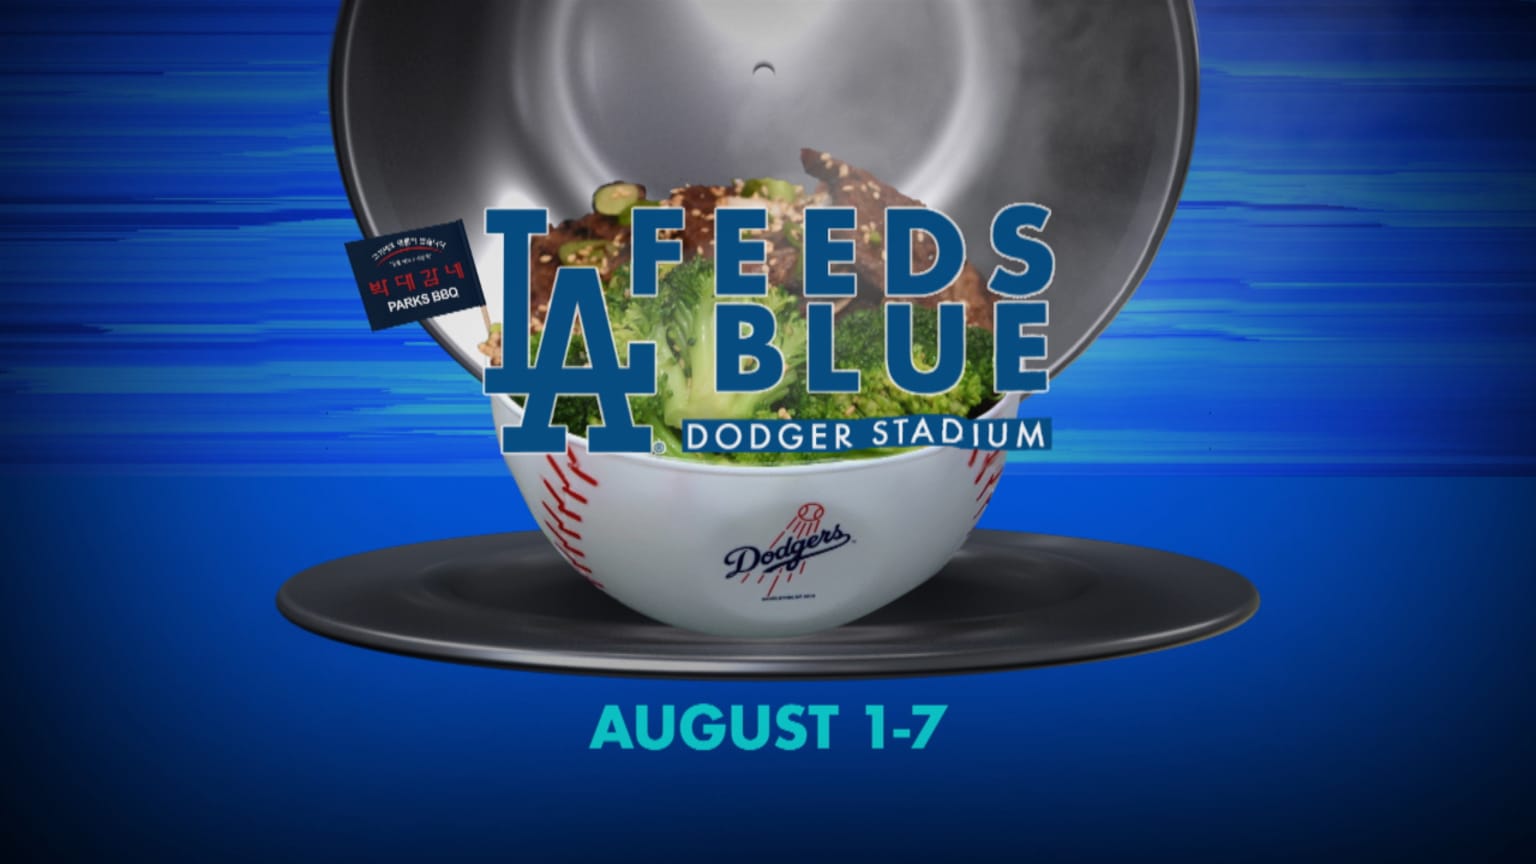 LA Feeds Blue Parks BBQ 08/01/2019 MLB